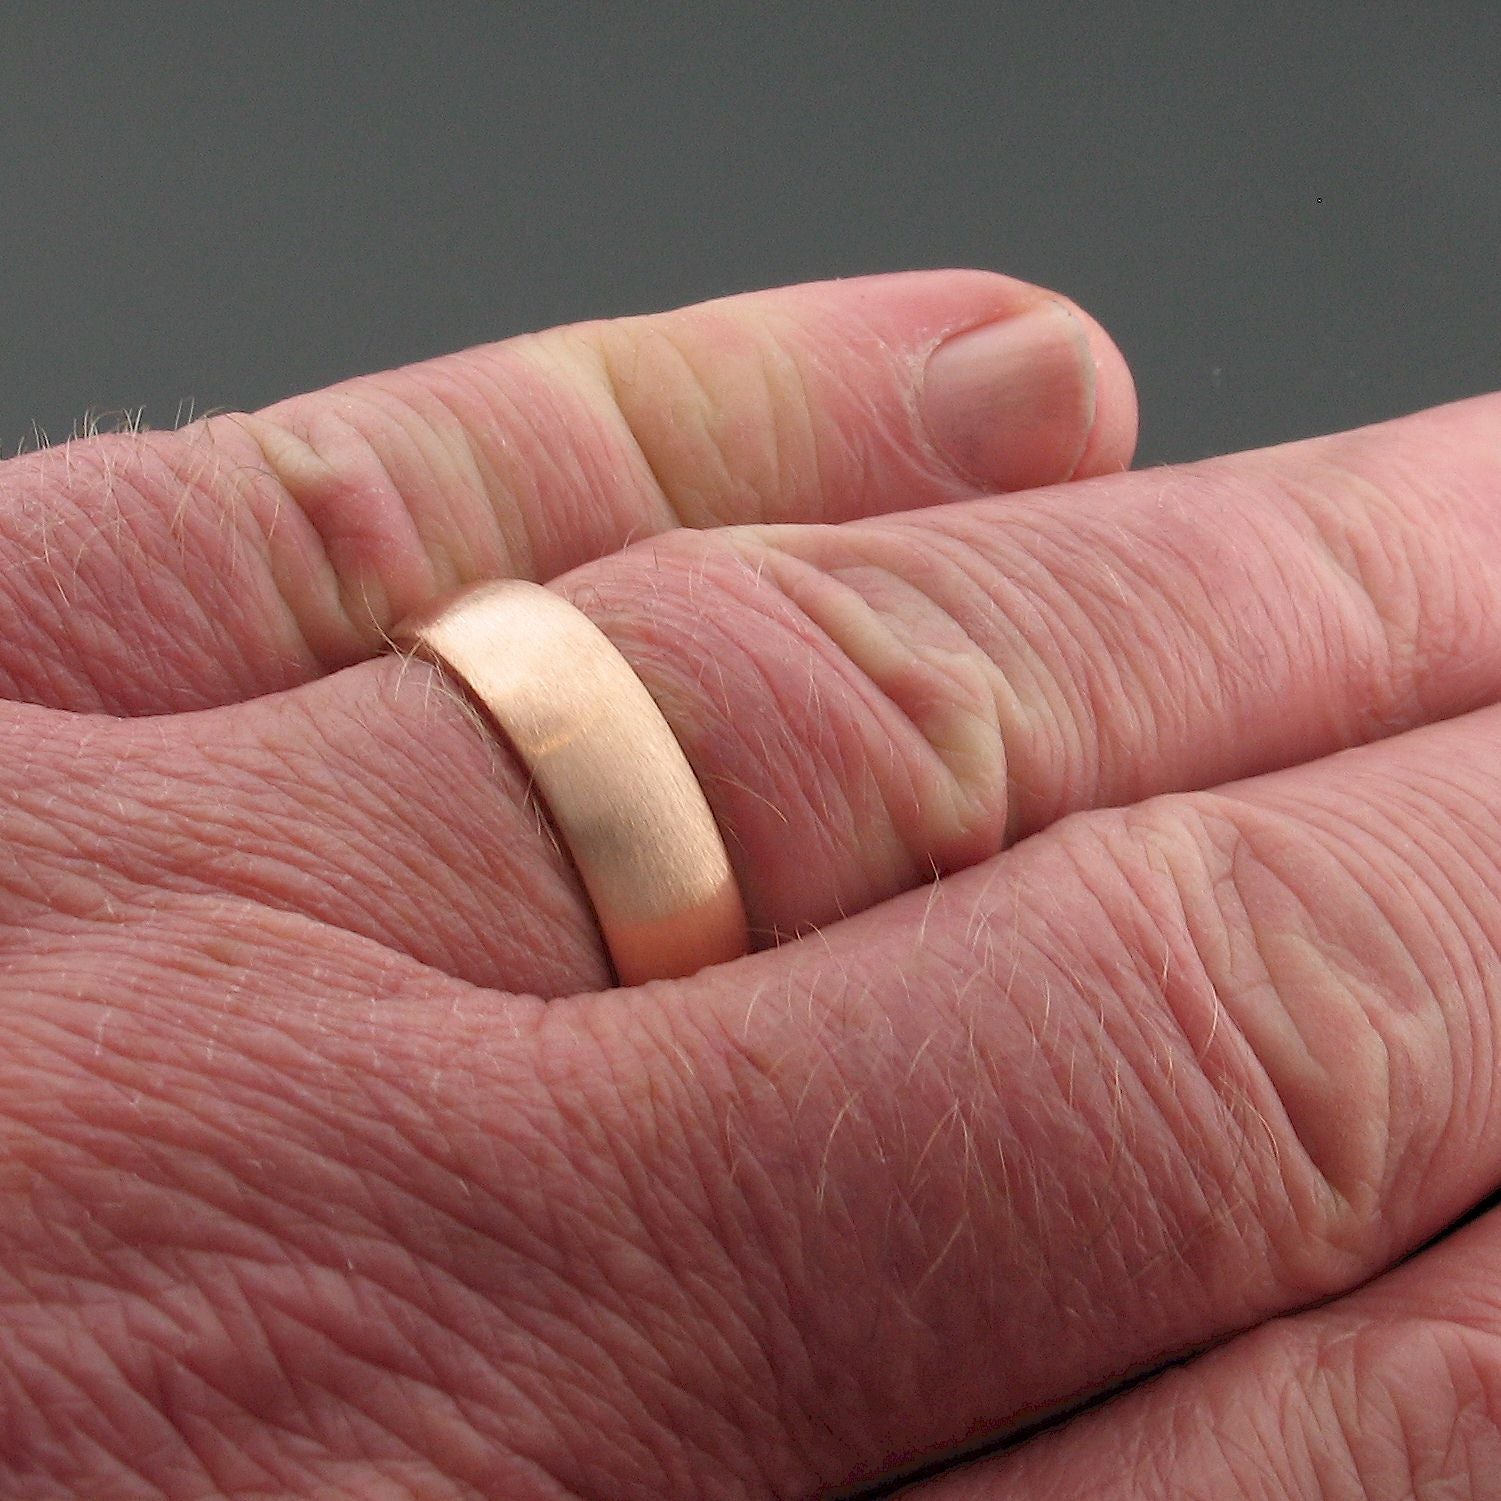 Rose gold court broad wedding ring. - Cumbrian Designs